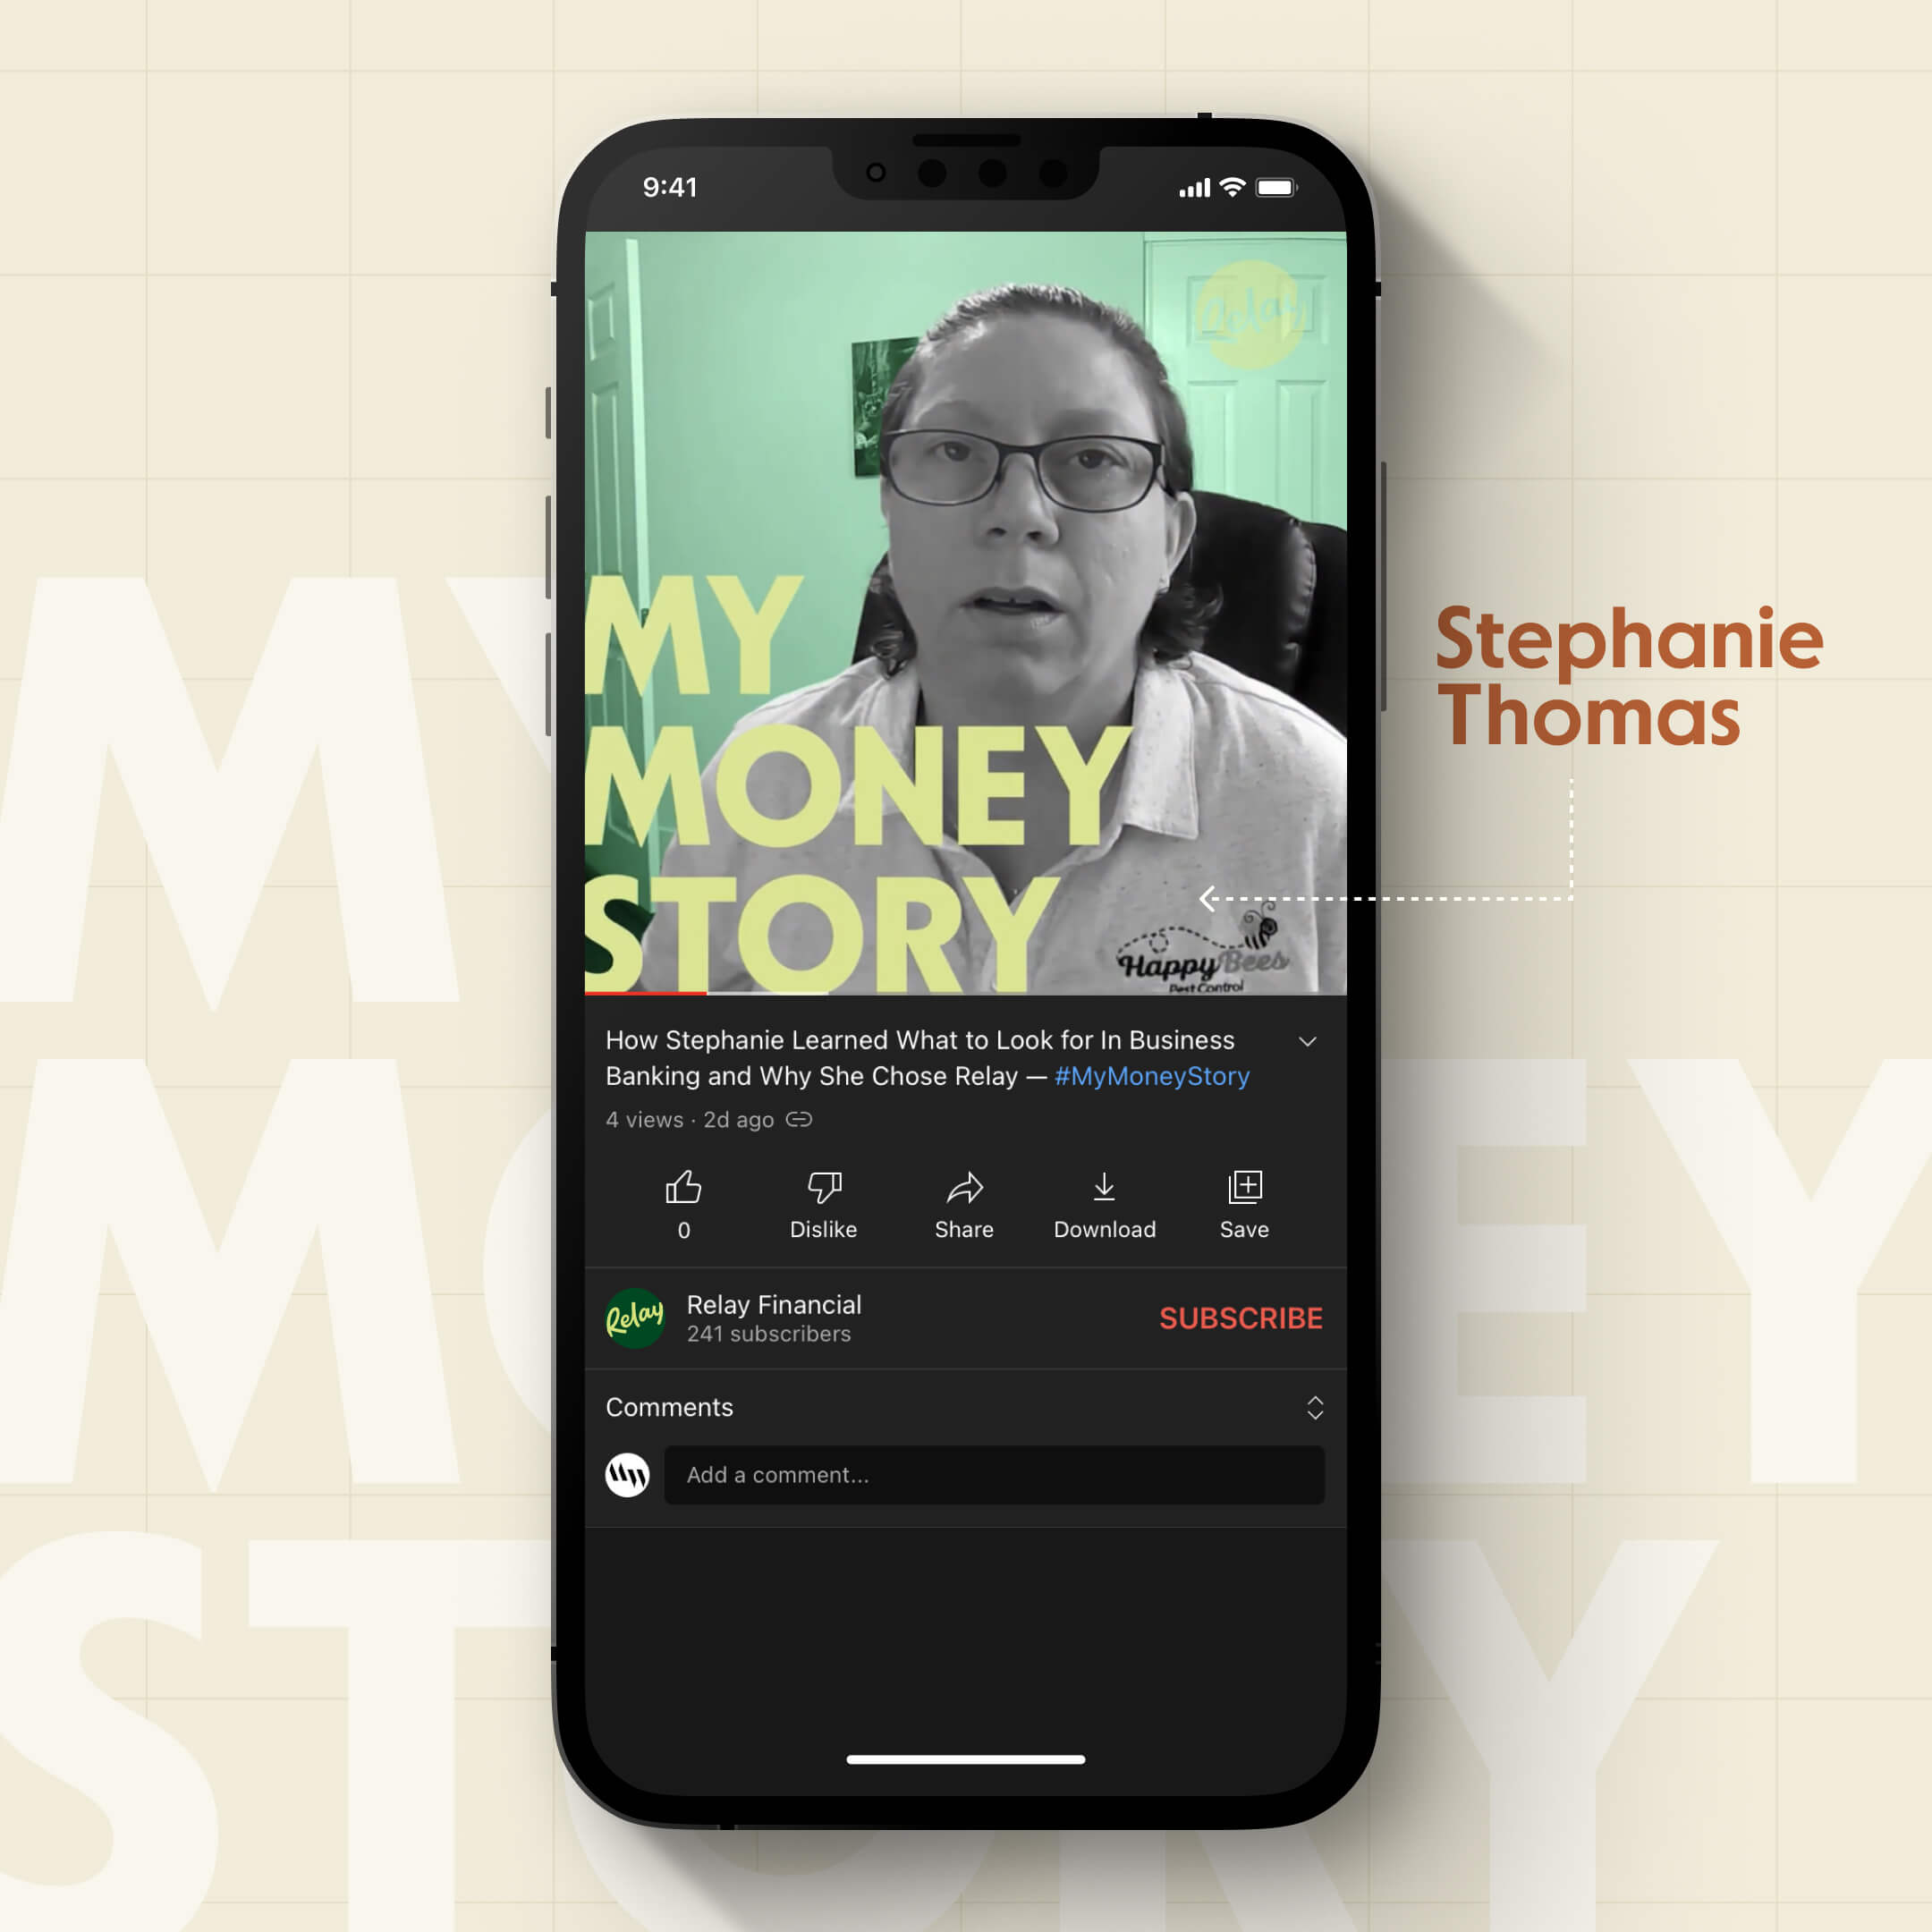 Stephanie Thomas's My Money Story video